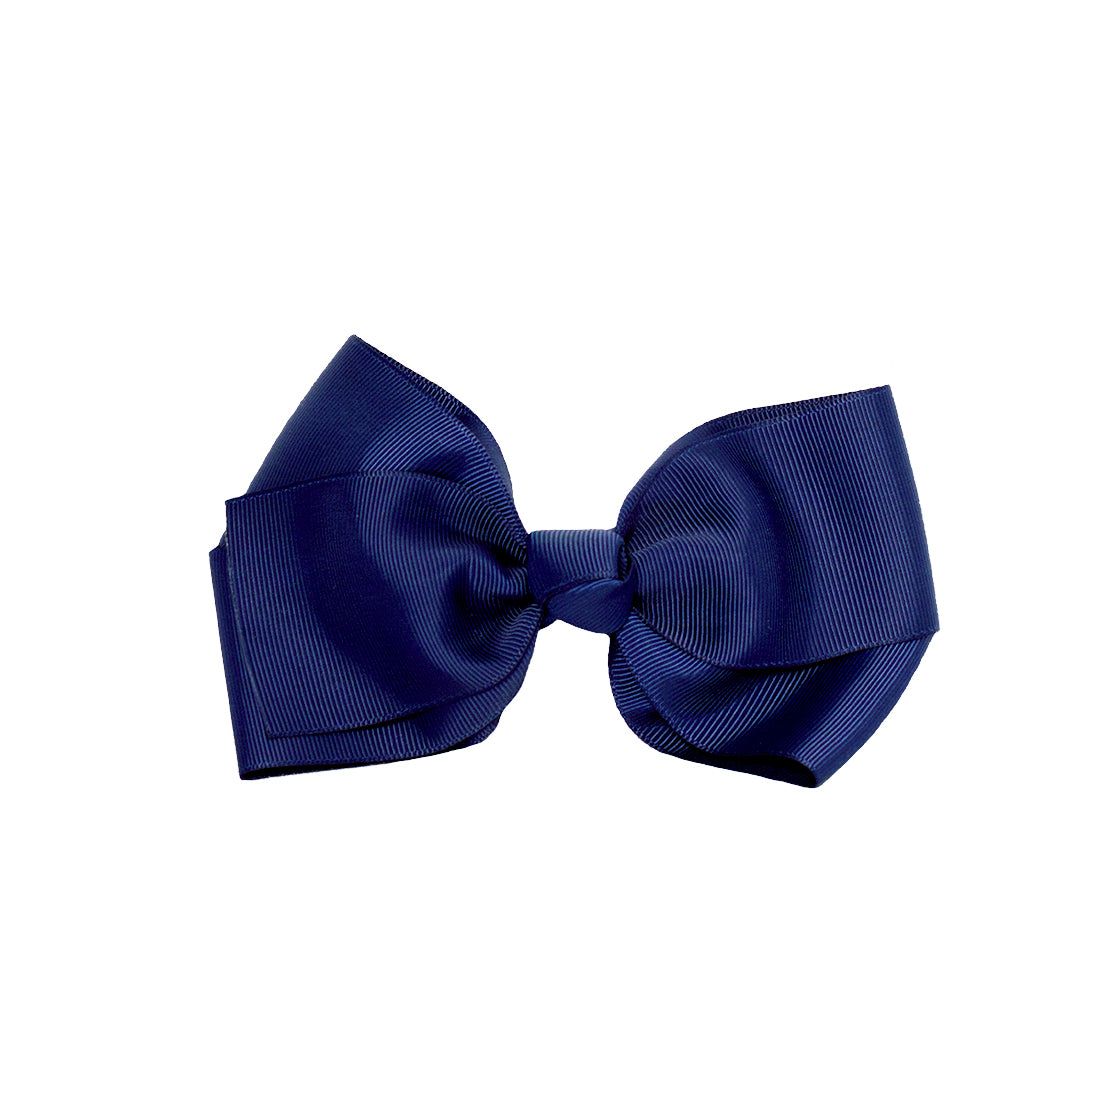 Mia® Spirit Grosgrain Ribbon Bow Barrette - large size - navy blue color - designed by #MiaKaminski of Mia Beauty